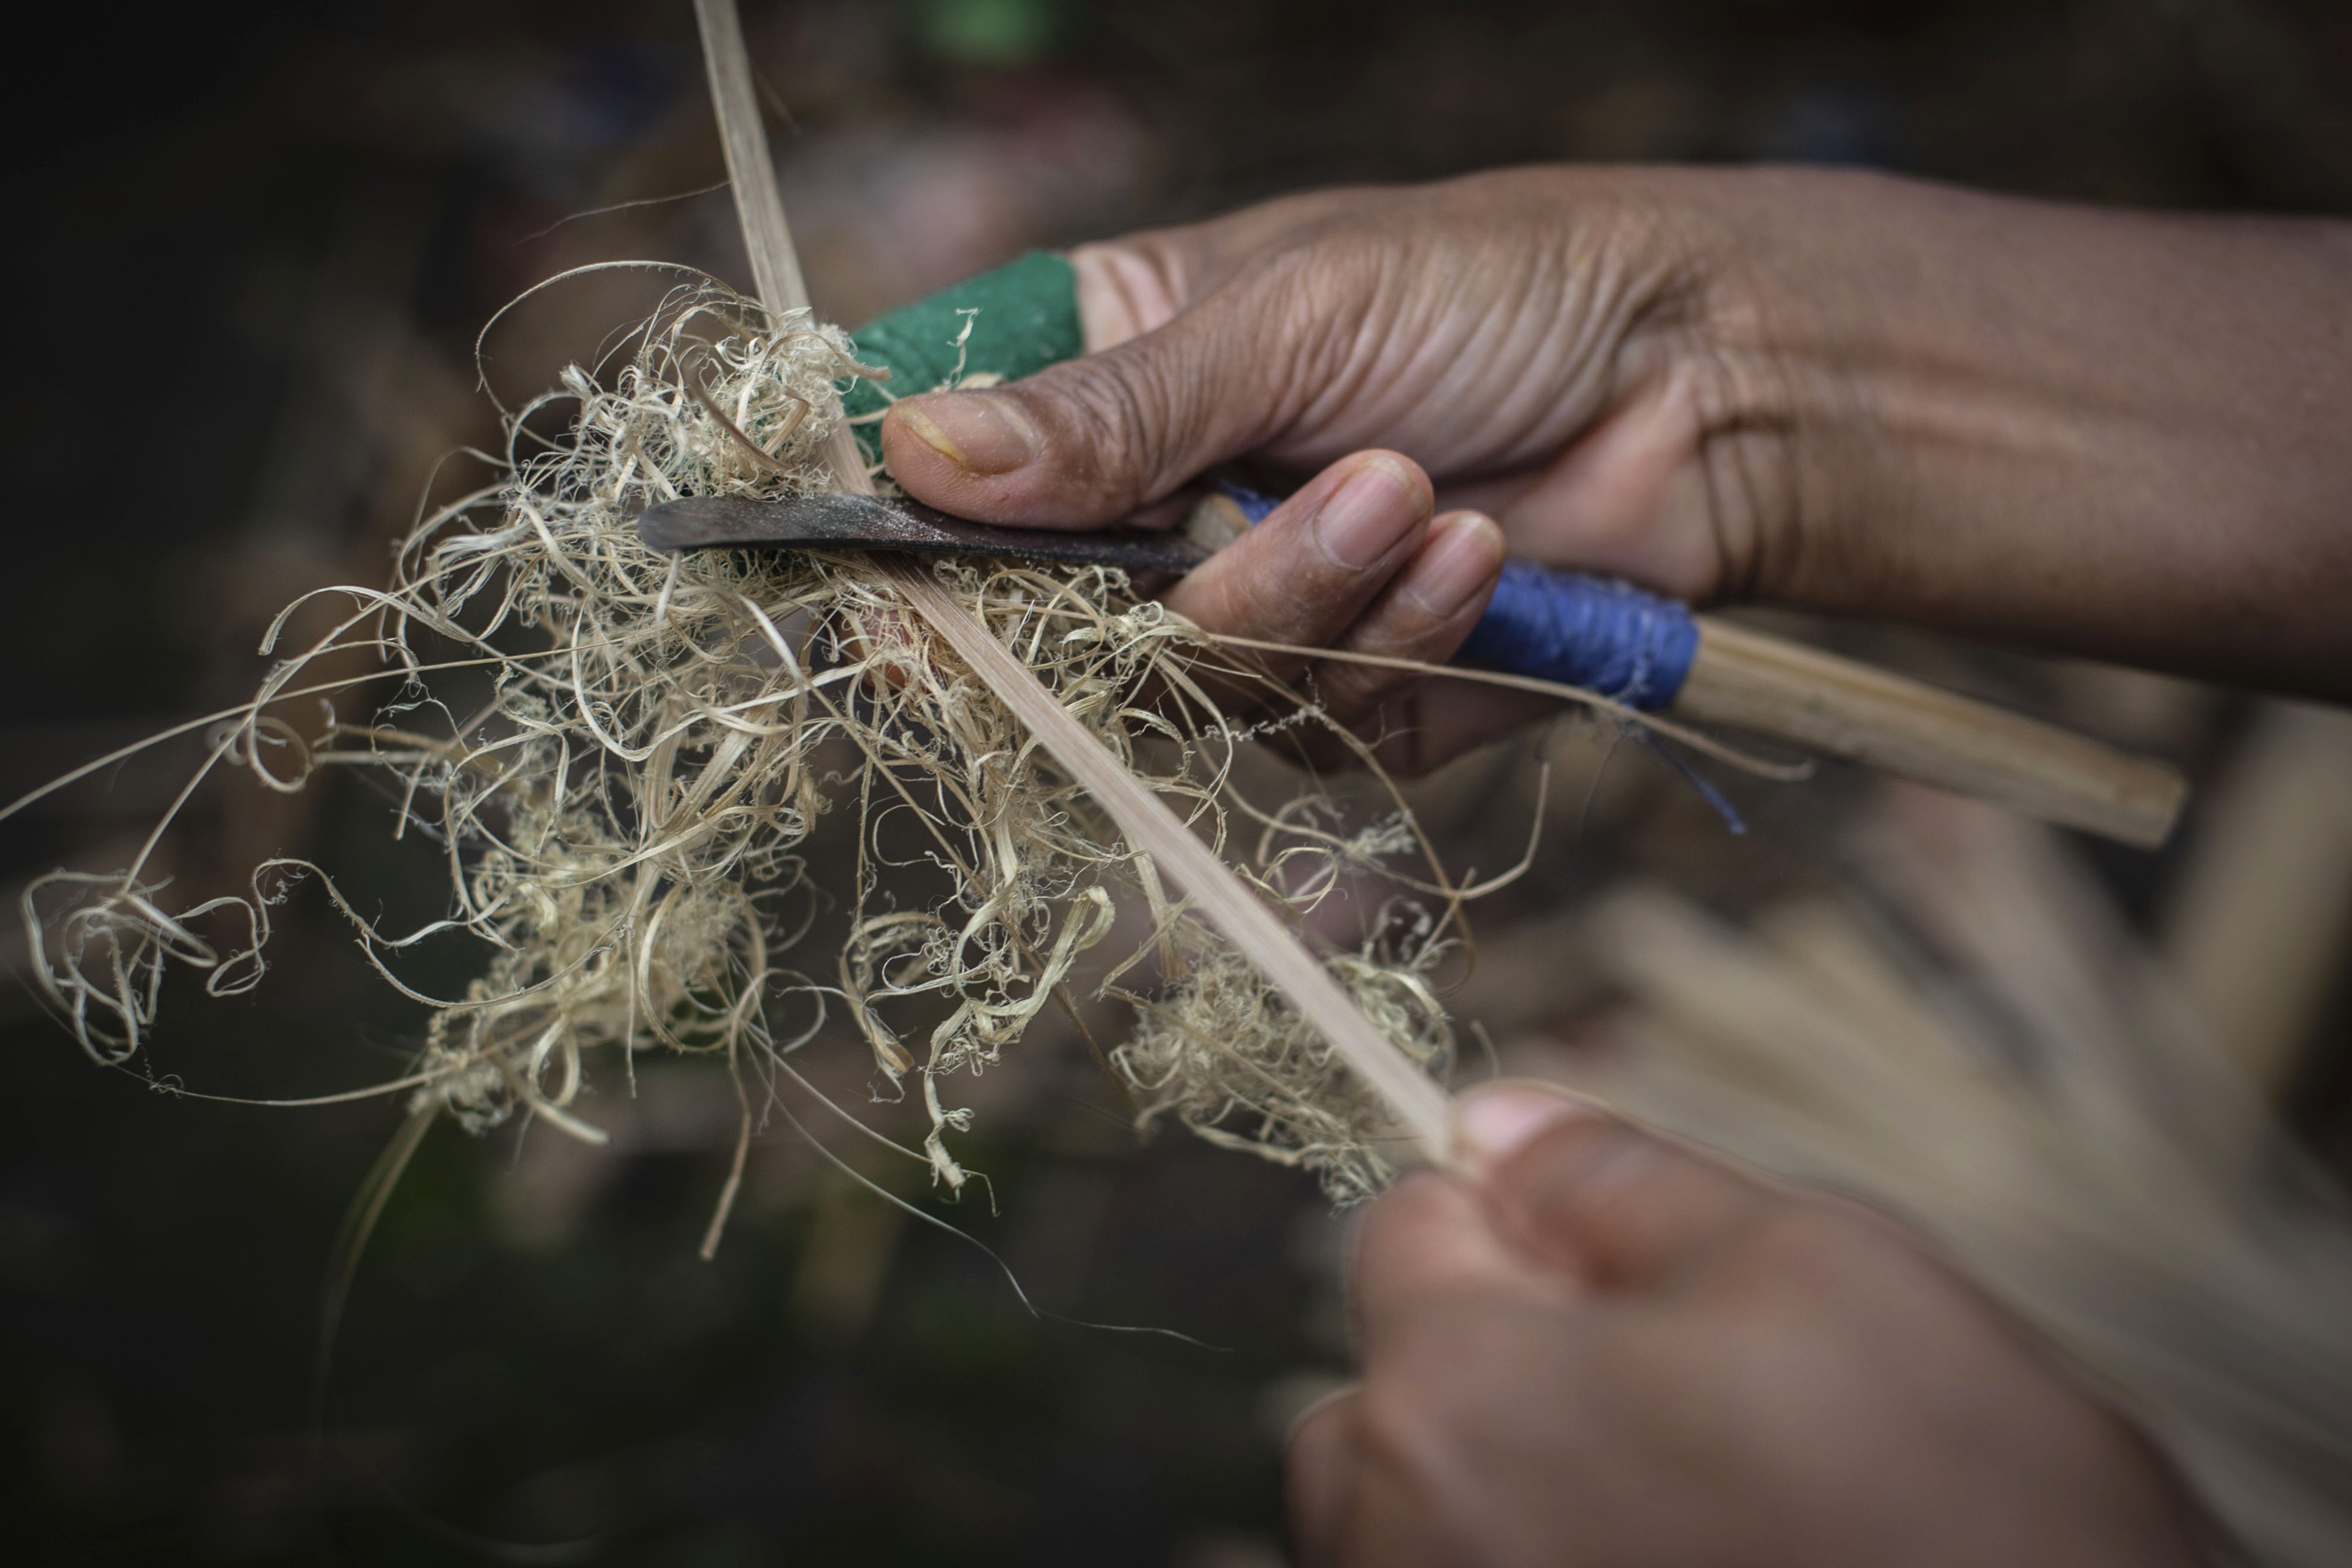 Pengrajin menghaluskan potongan bambu di Desa Loyok, Sakra, Lombok Timur, Nusa Tenggara Barat.